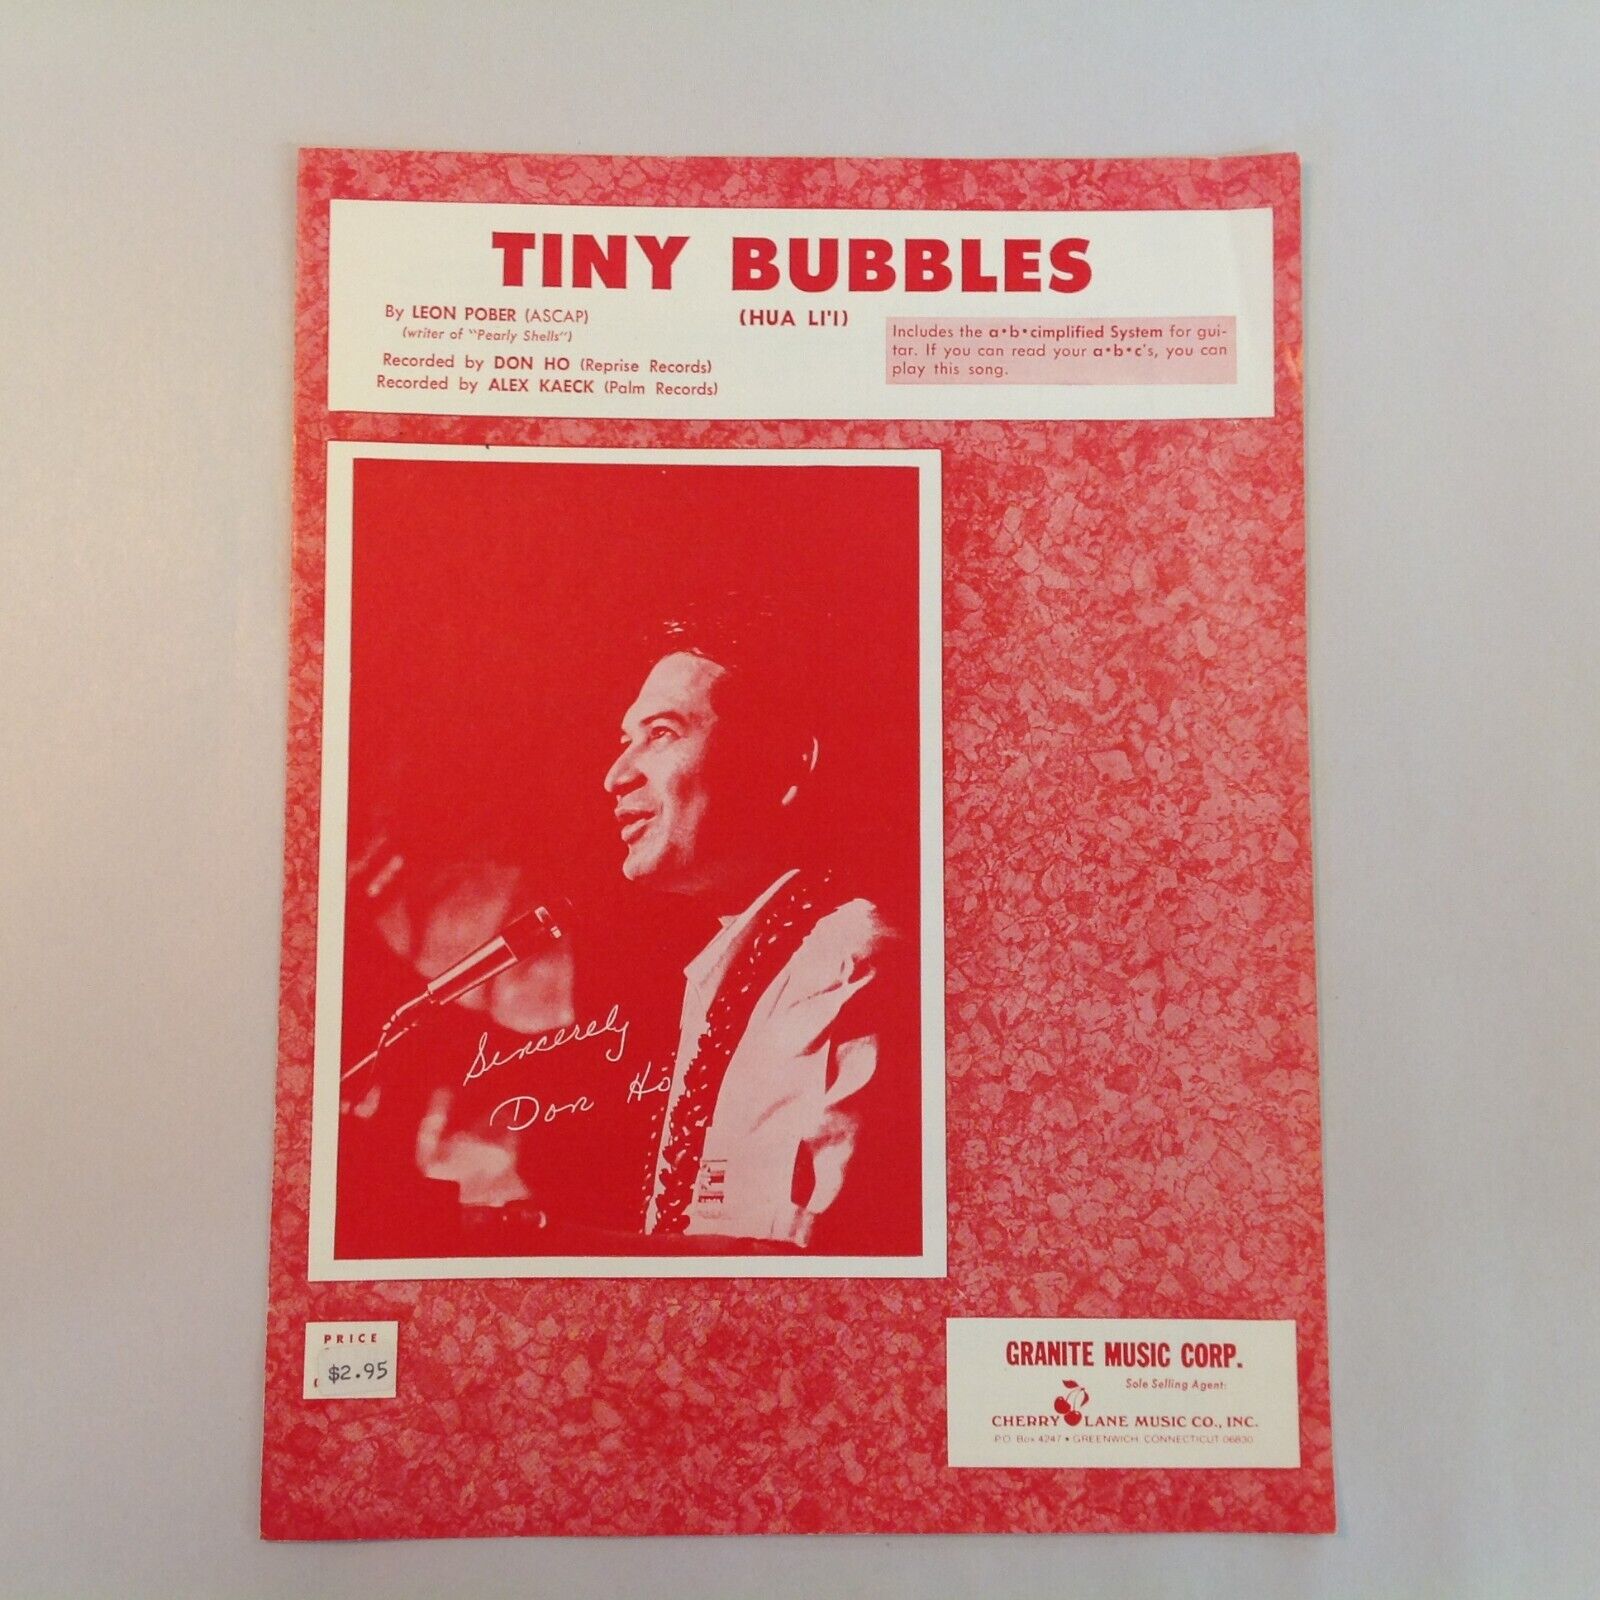 Vintage 1966 Sheet Music Tiny Bubbles Hua Li'i Leon Pober Don Ho Alex Kaeck